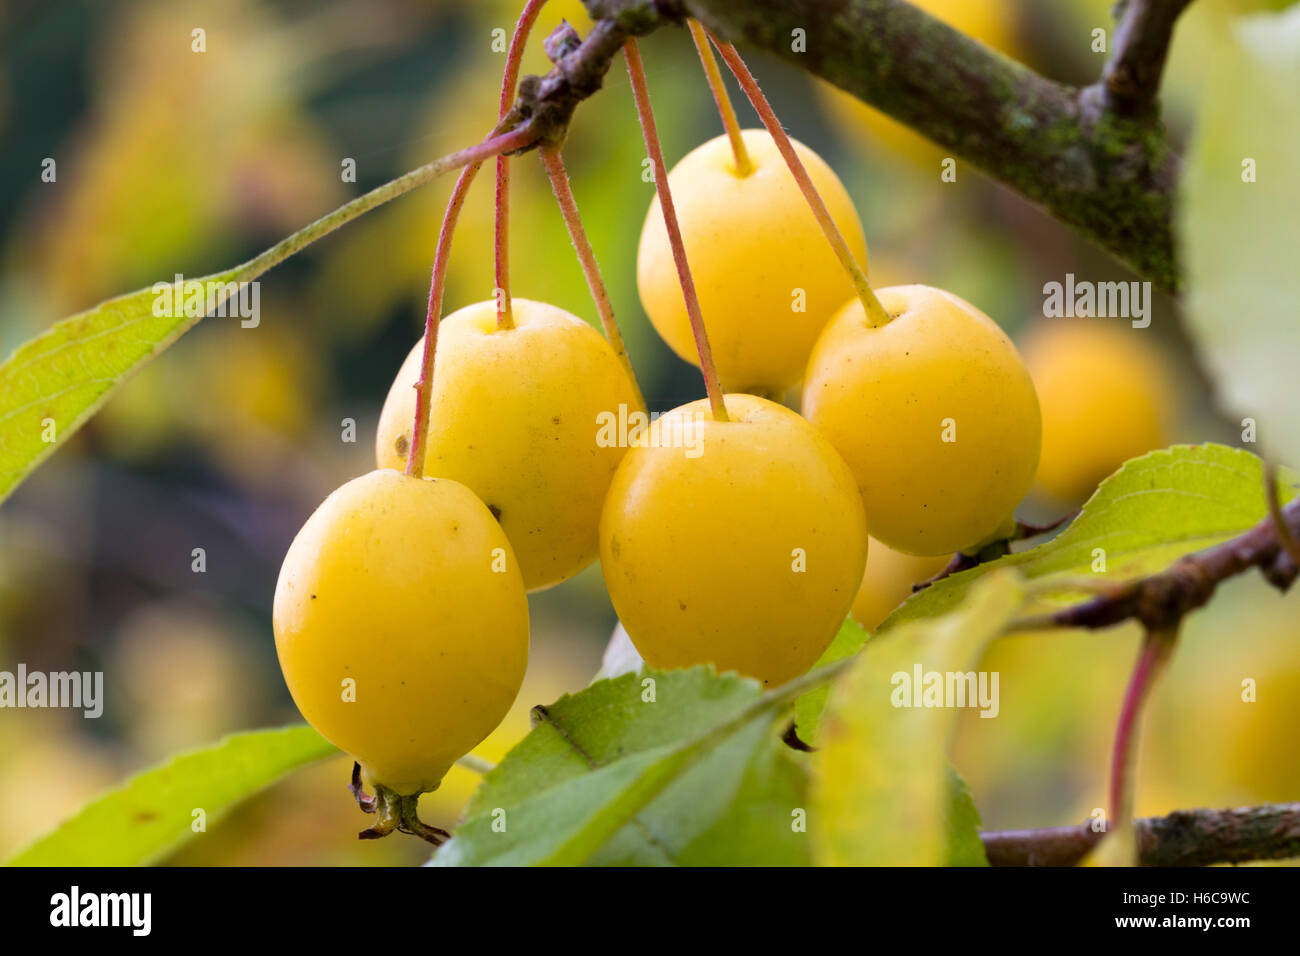 Yellow autumn crab apples of the deciduous small tree, Malus 'Comtesse de Paris' Stock Photo